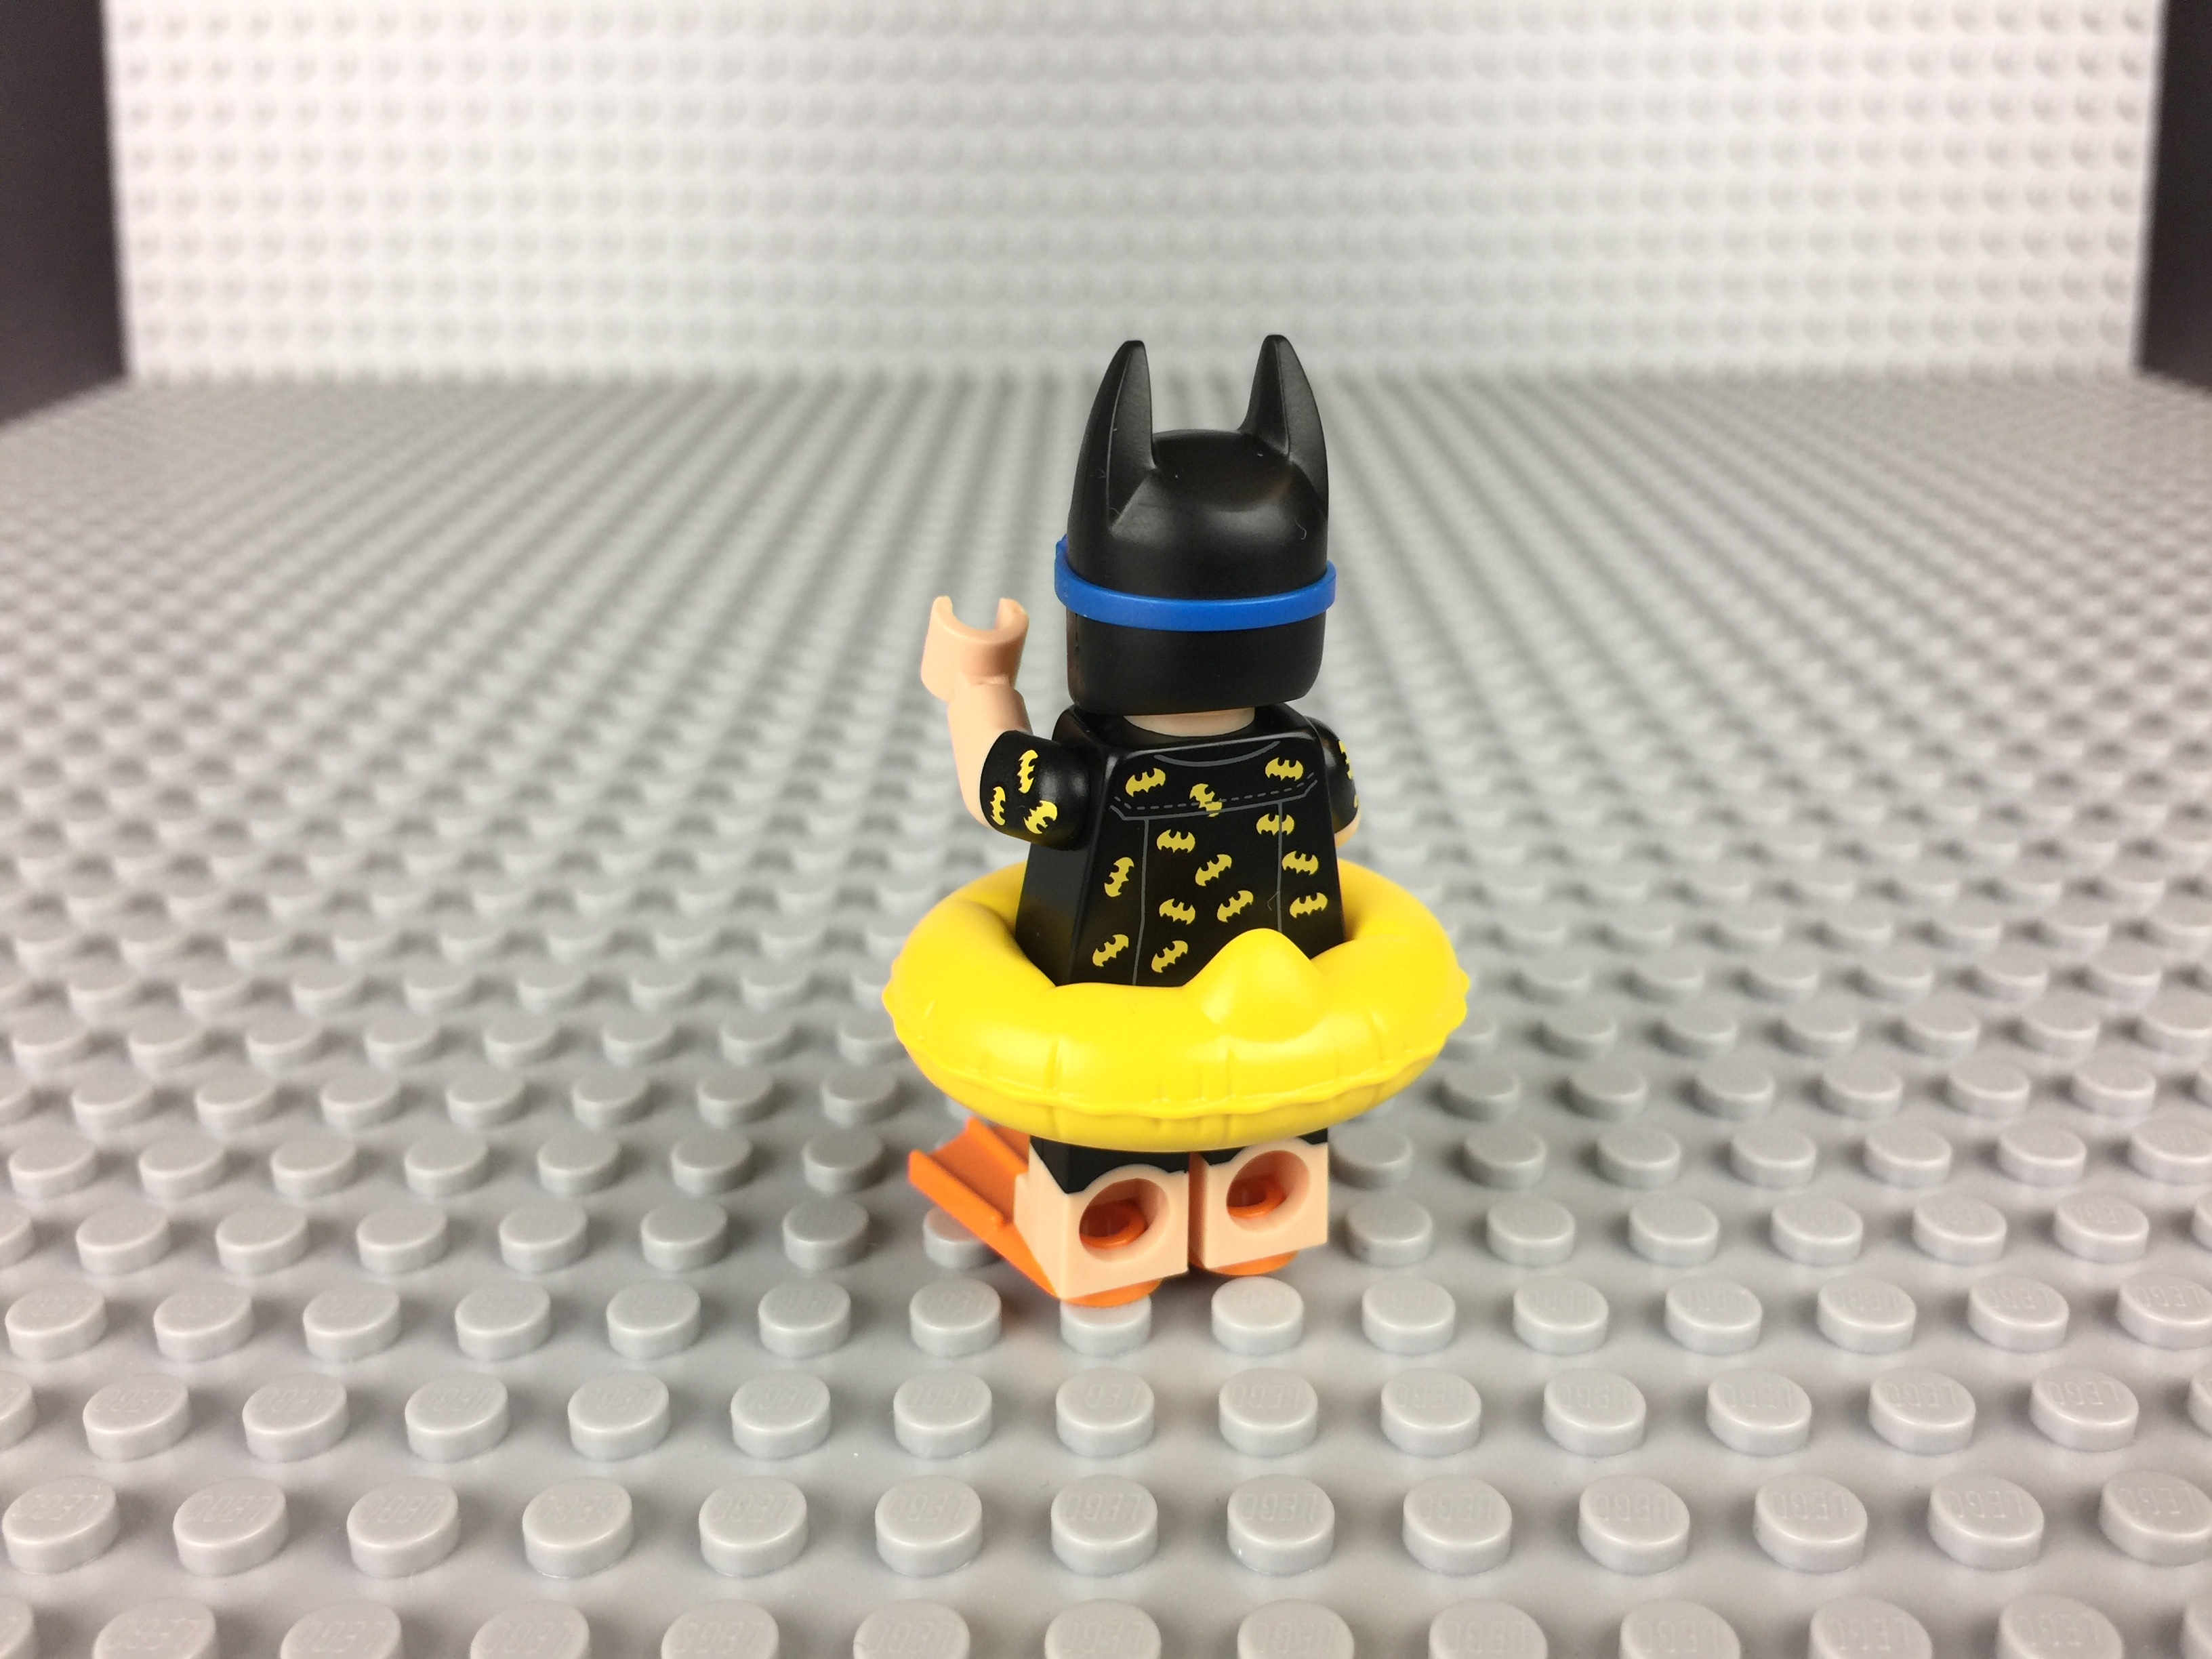 LEGO Minifig Collectible BATMAN MOVIE Series 71017 Vacation Batman